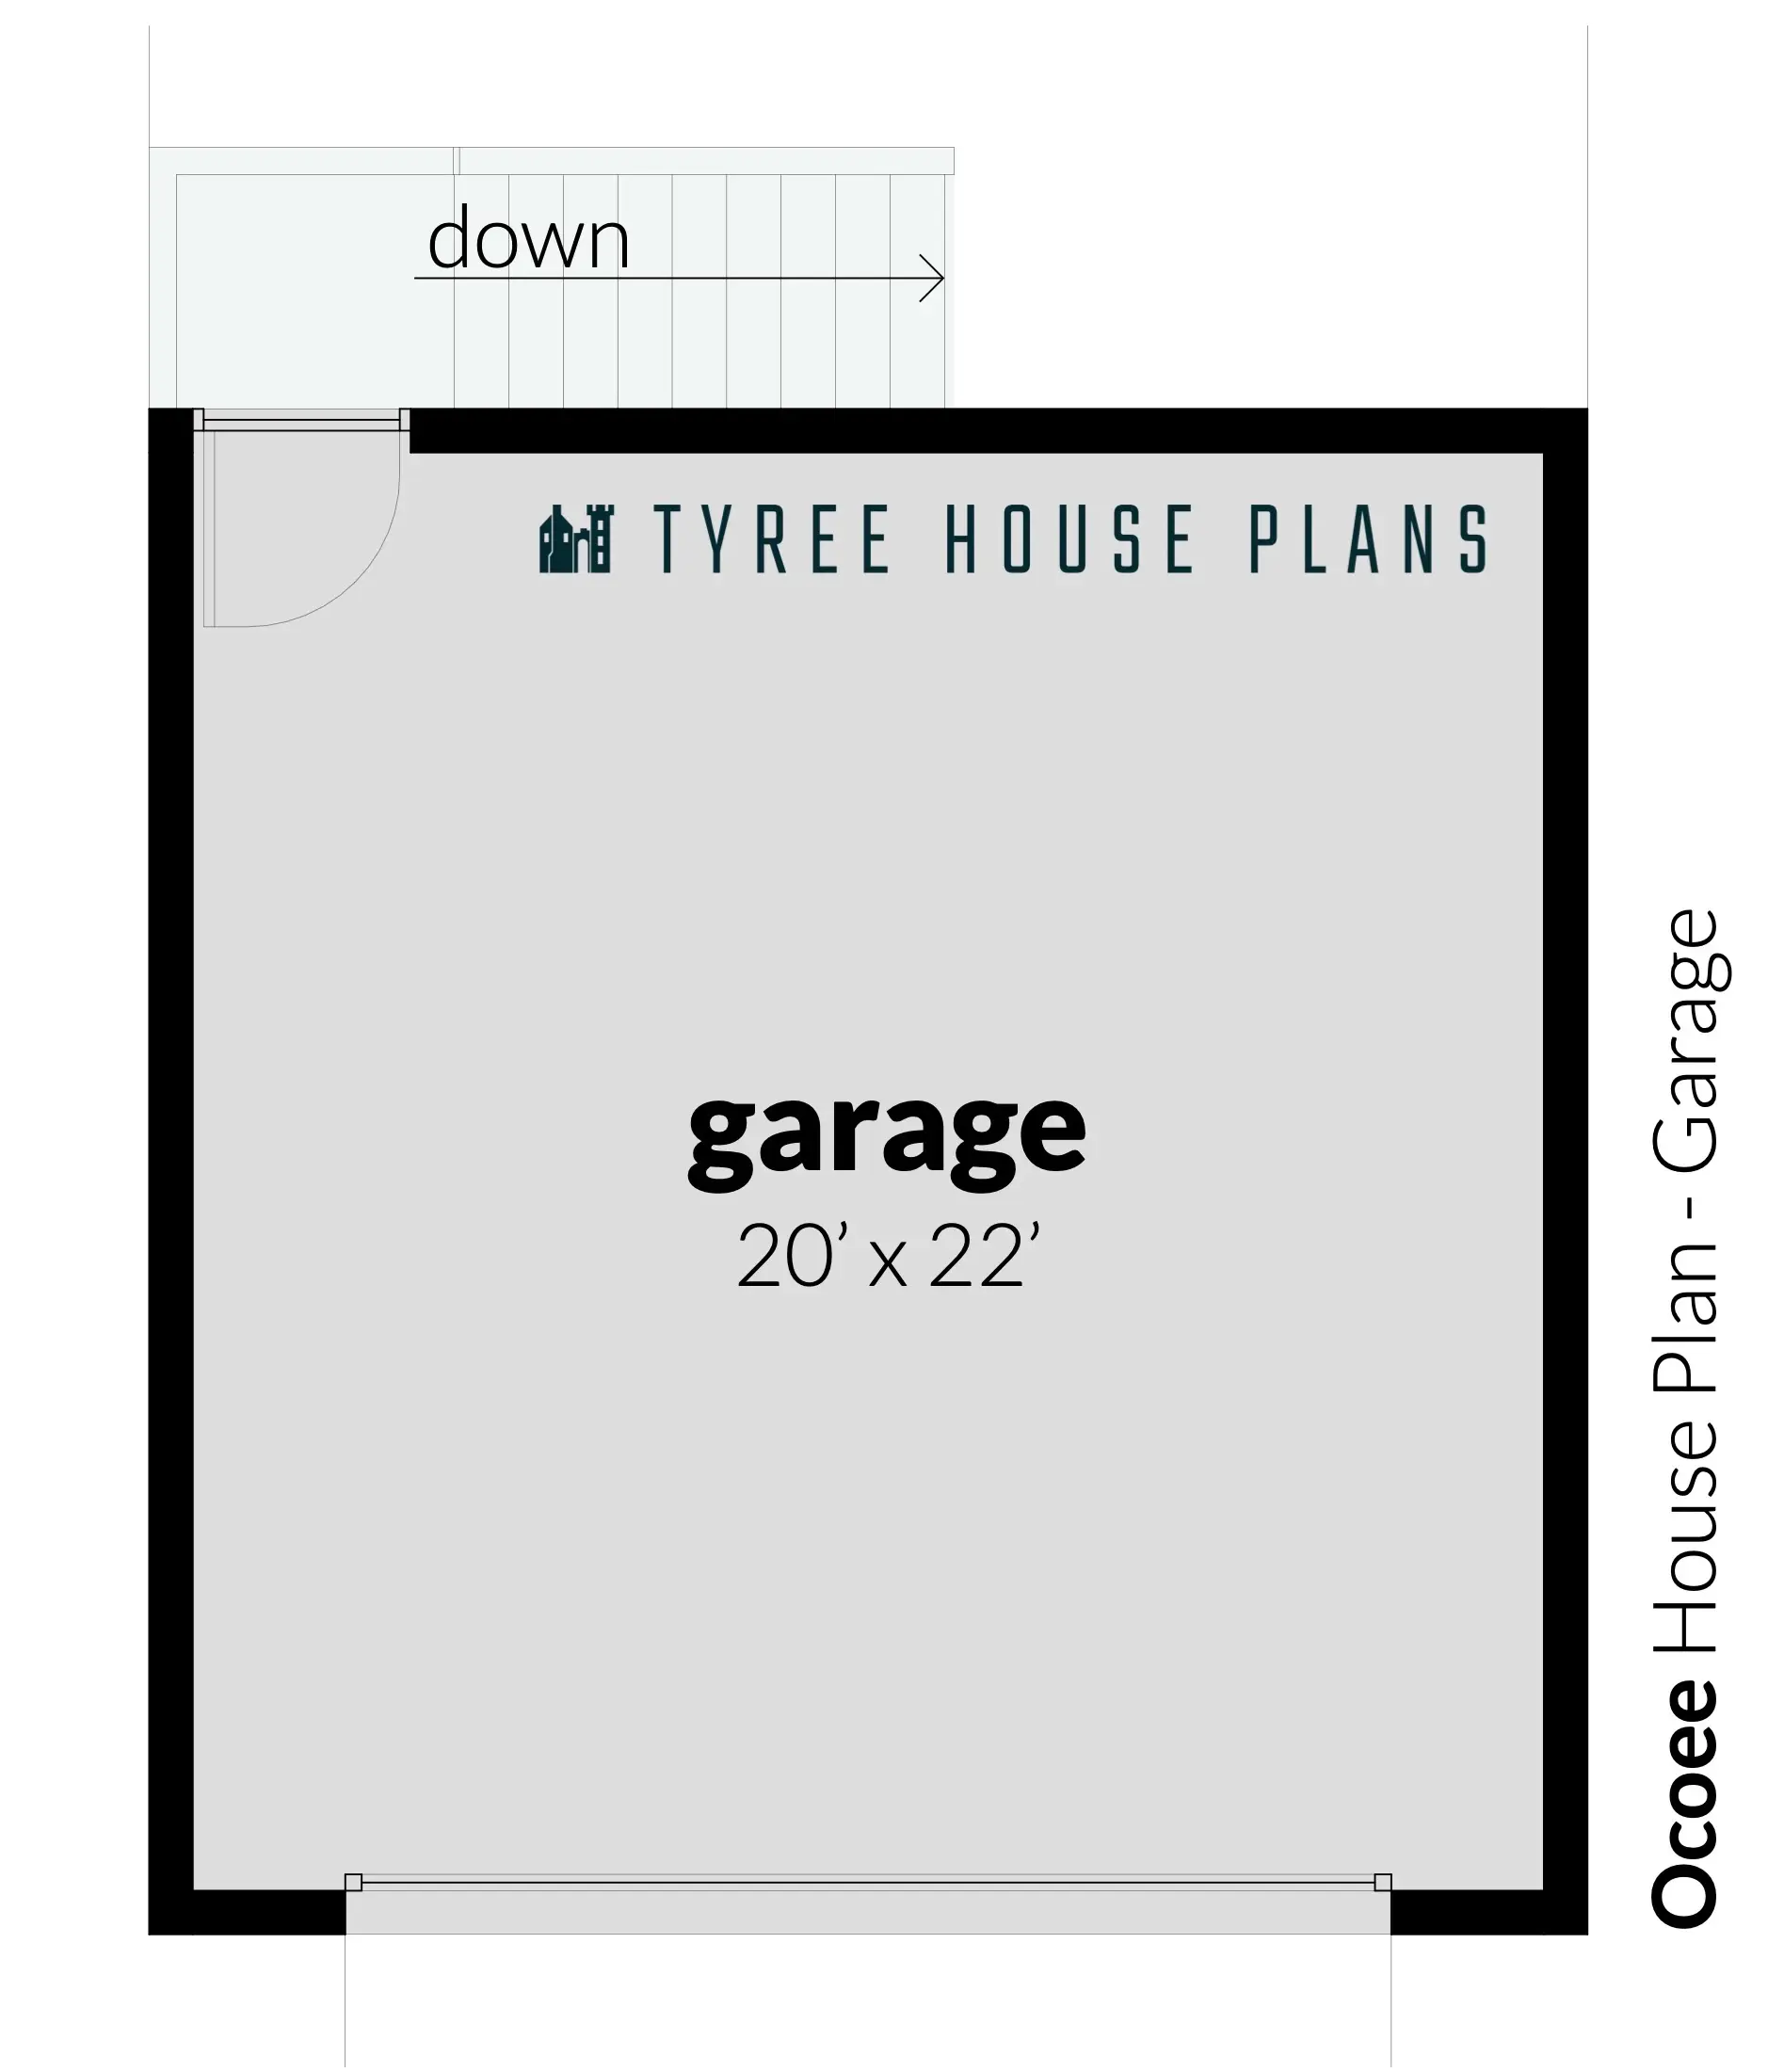 Garage - Ocoee by Tyree House Plans